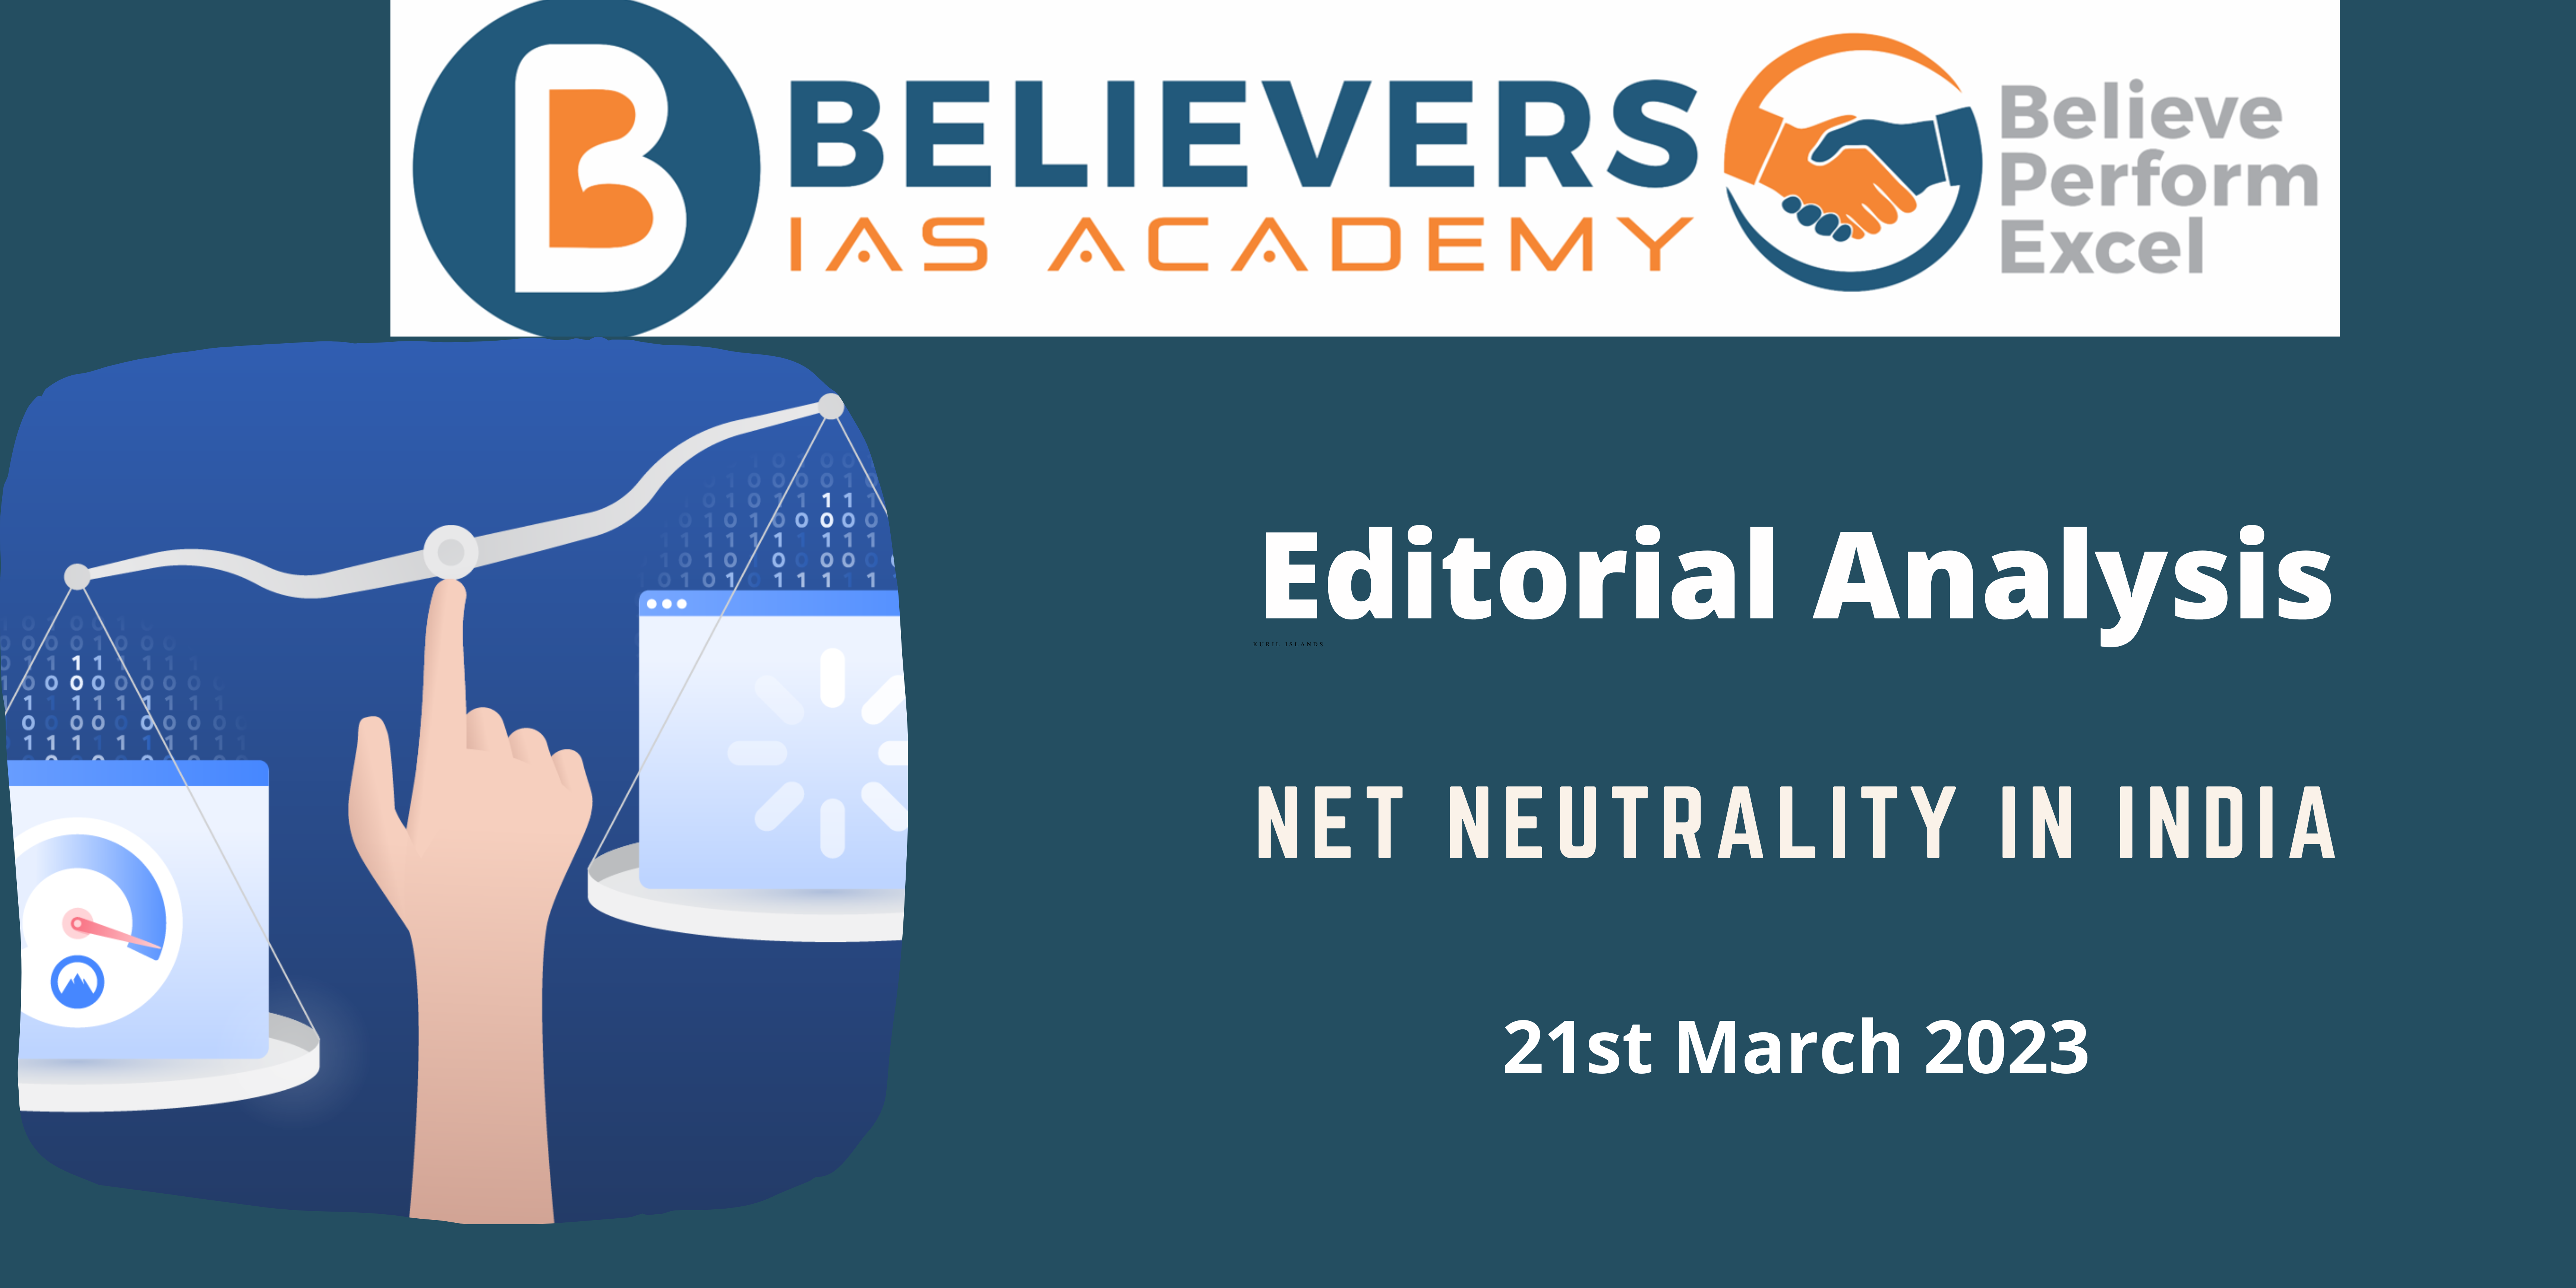 Net neutrality in India